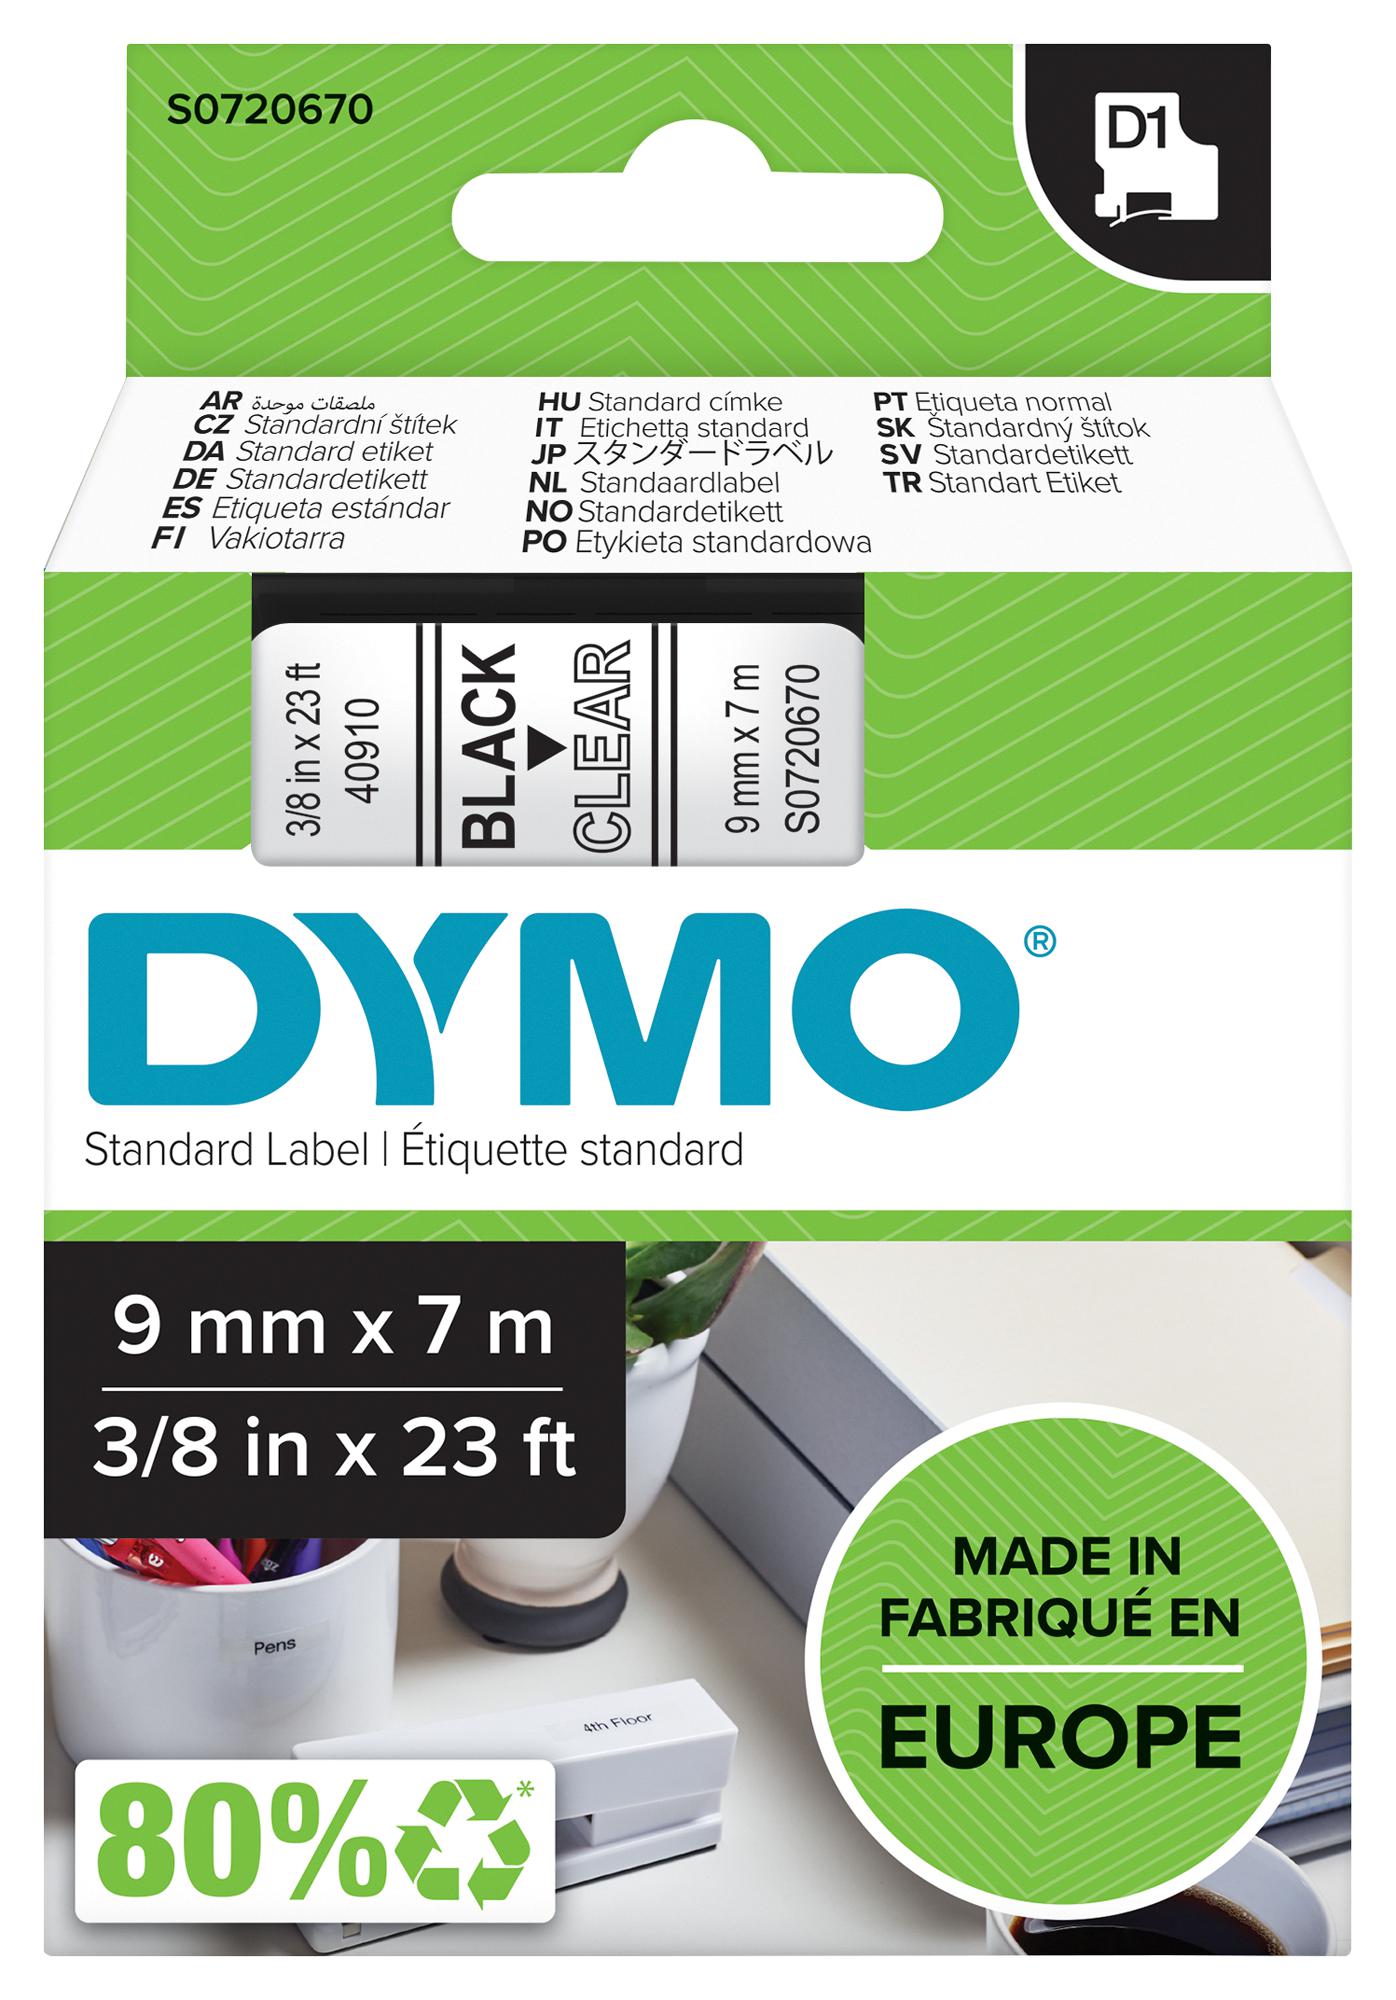 Dymo 40910 Tape, Black/clear, 9mm